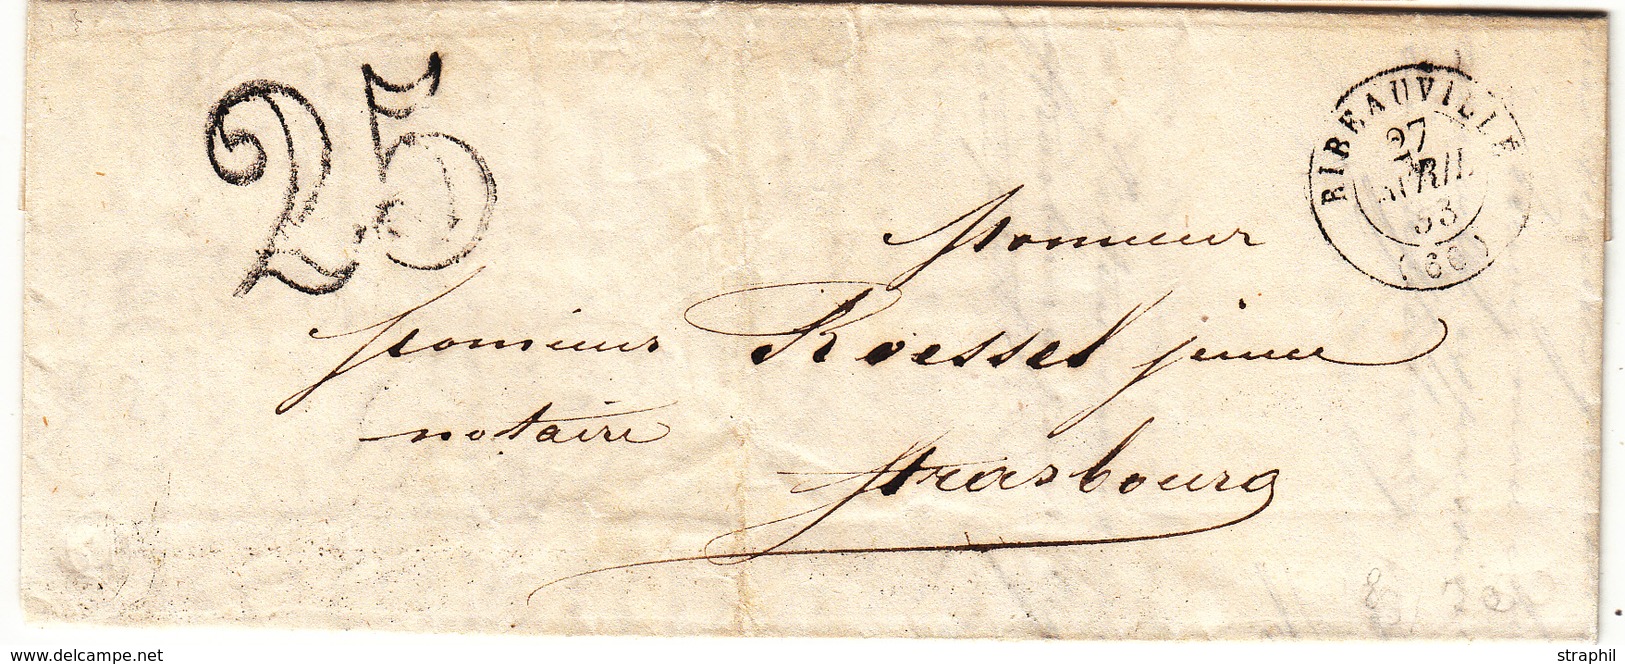 LAC T15 Ribeauvillé (1849) + CF "C"= St Hippolyte + Taxe Tampon 2 - B/TB - Cartas & Documentos